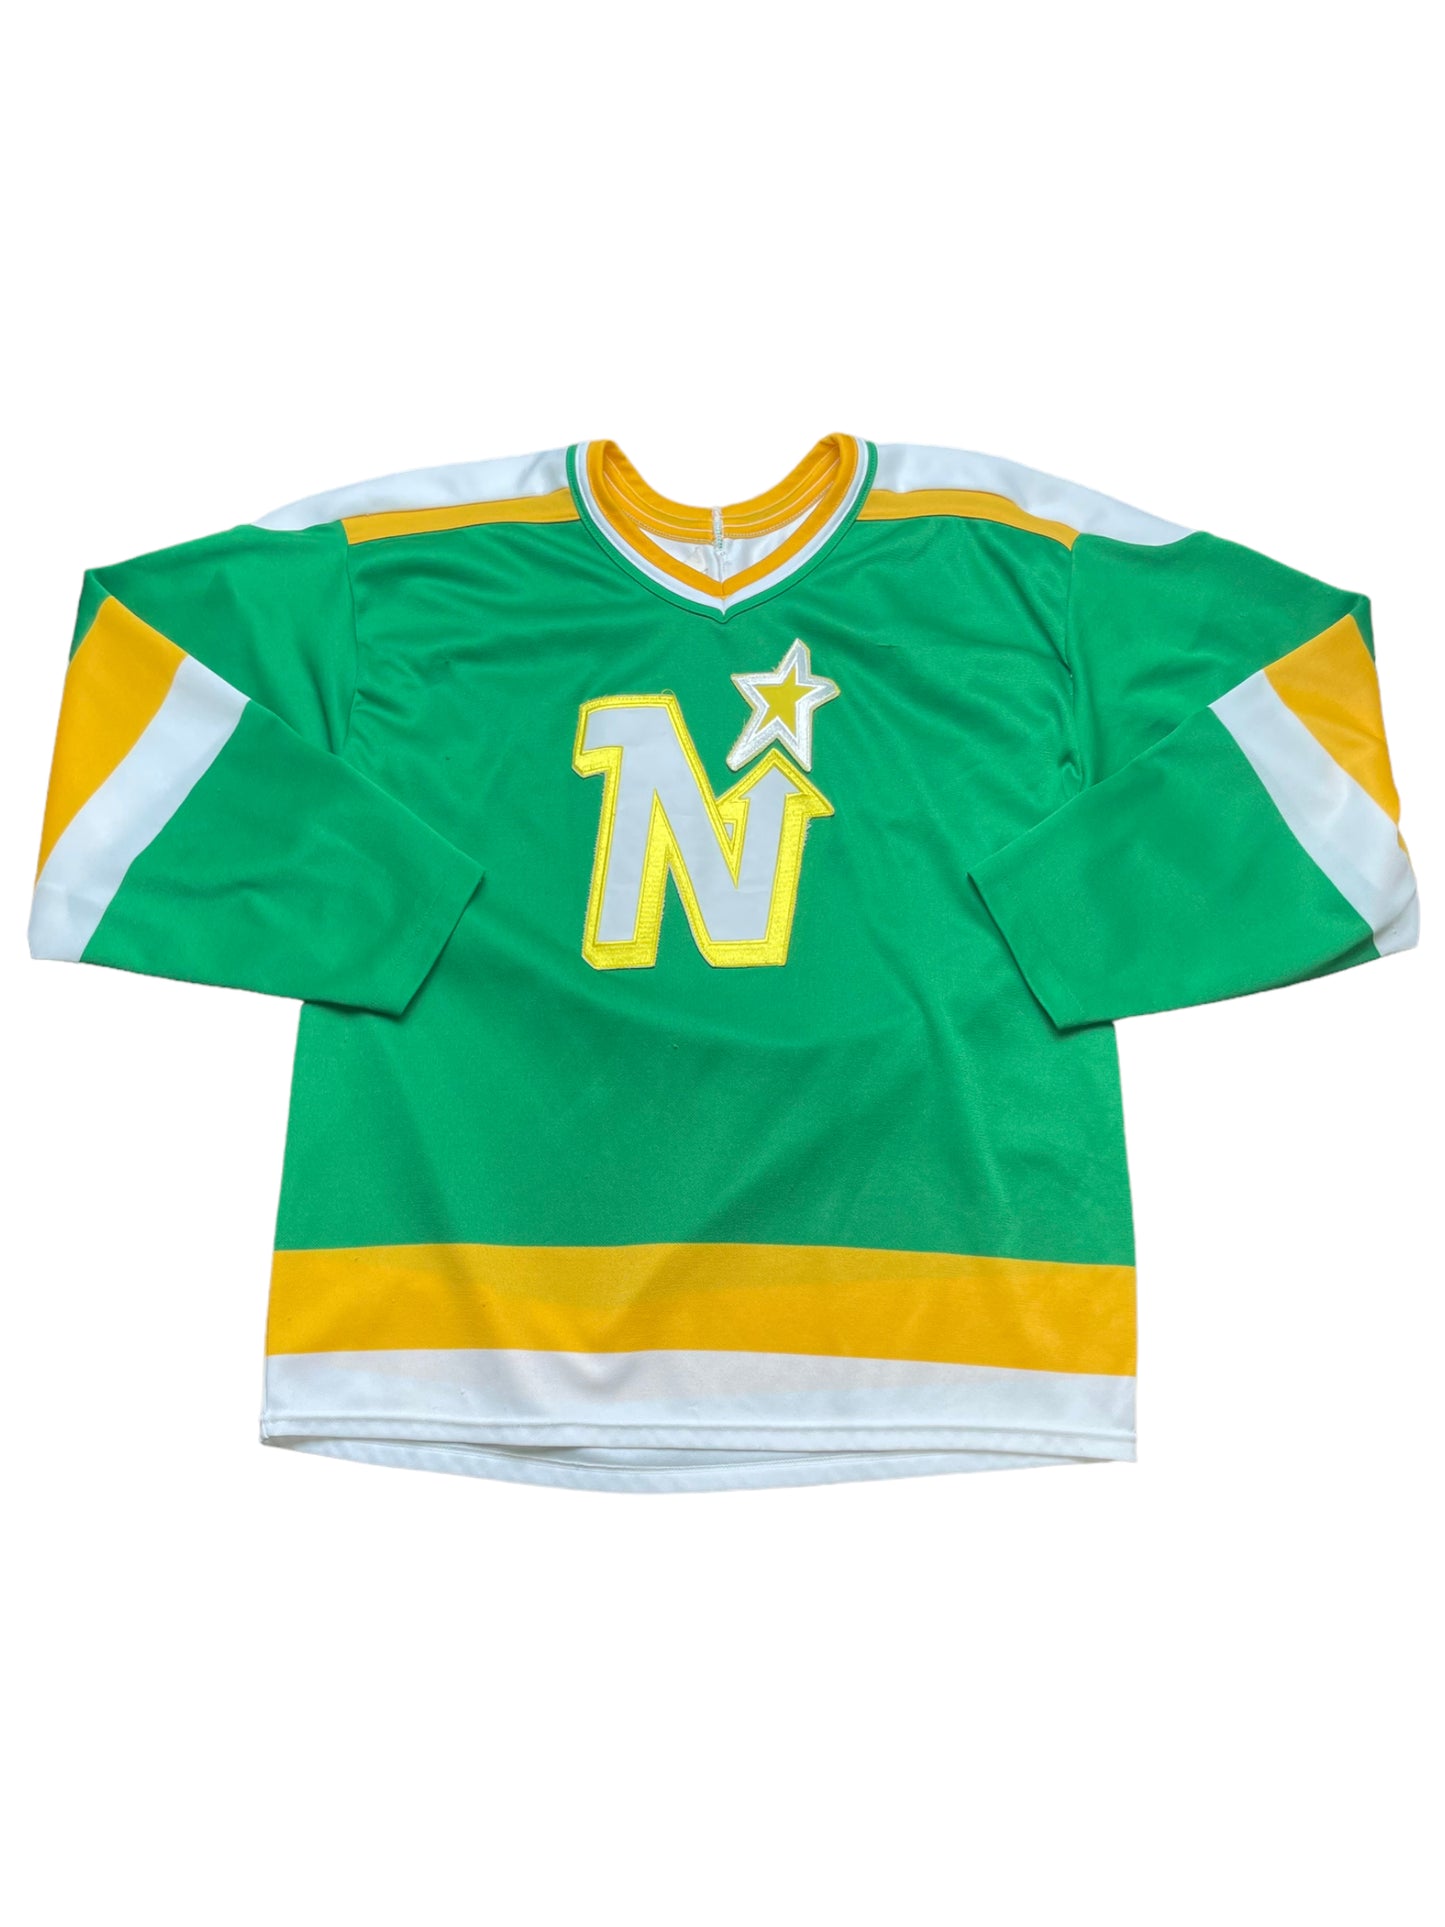 Vintage 90s Minnesota North Stars NHL Hockey Jersey Large